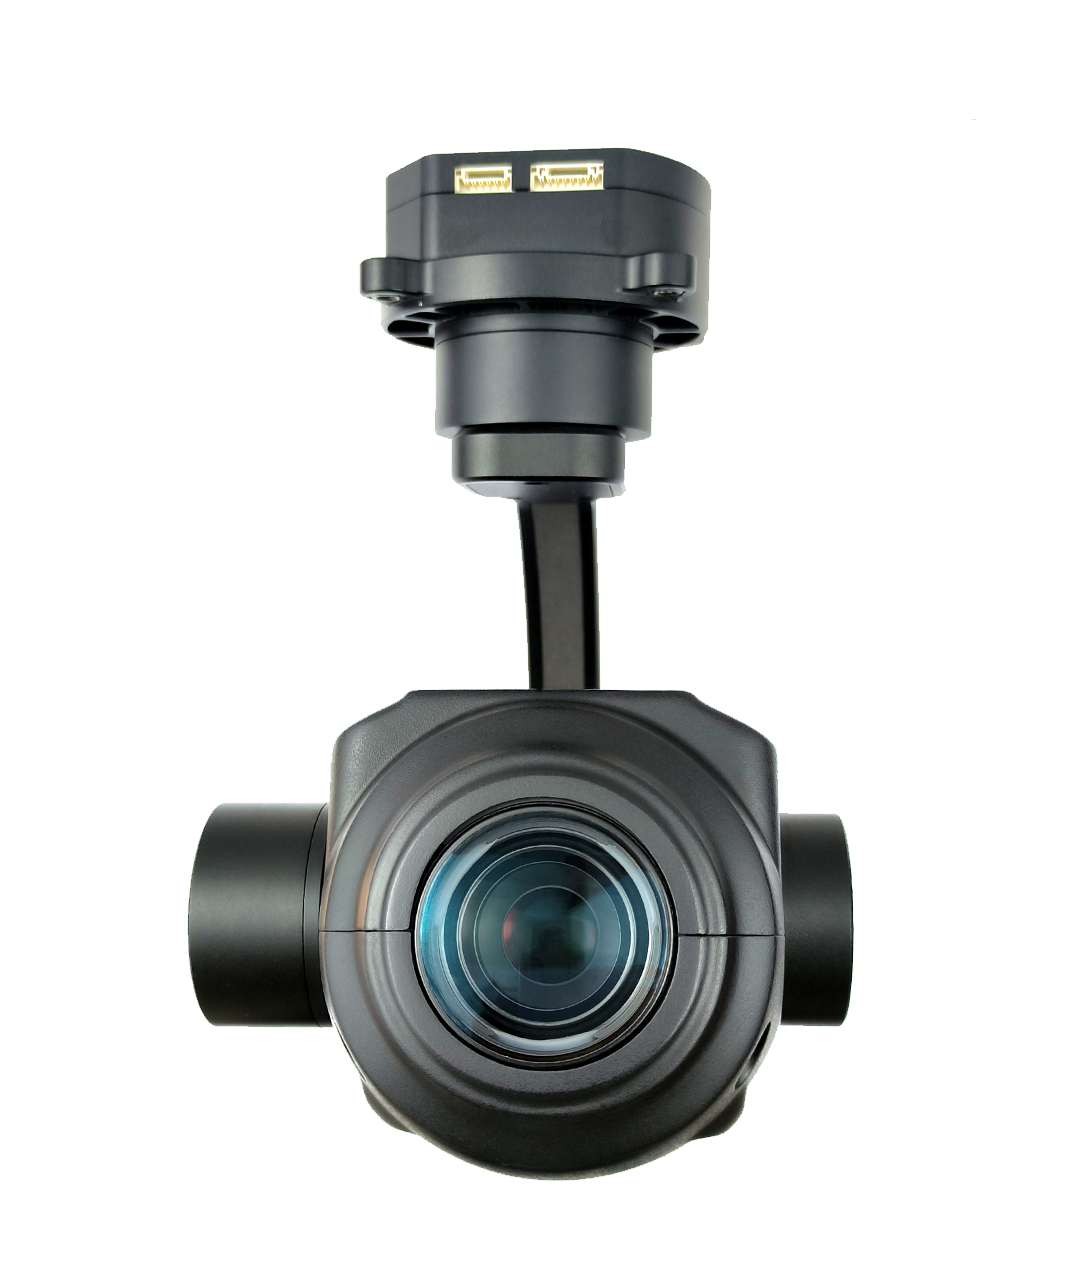 TOPOTEK KHP4KS585 Drone Gimbal Camera - 4K Resolution 4x Optical Zoom 3-Axis Stabilized Gimbal IP/HDMI output